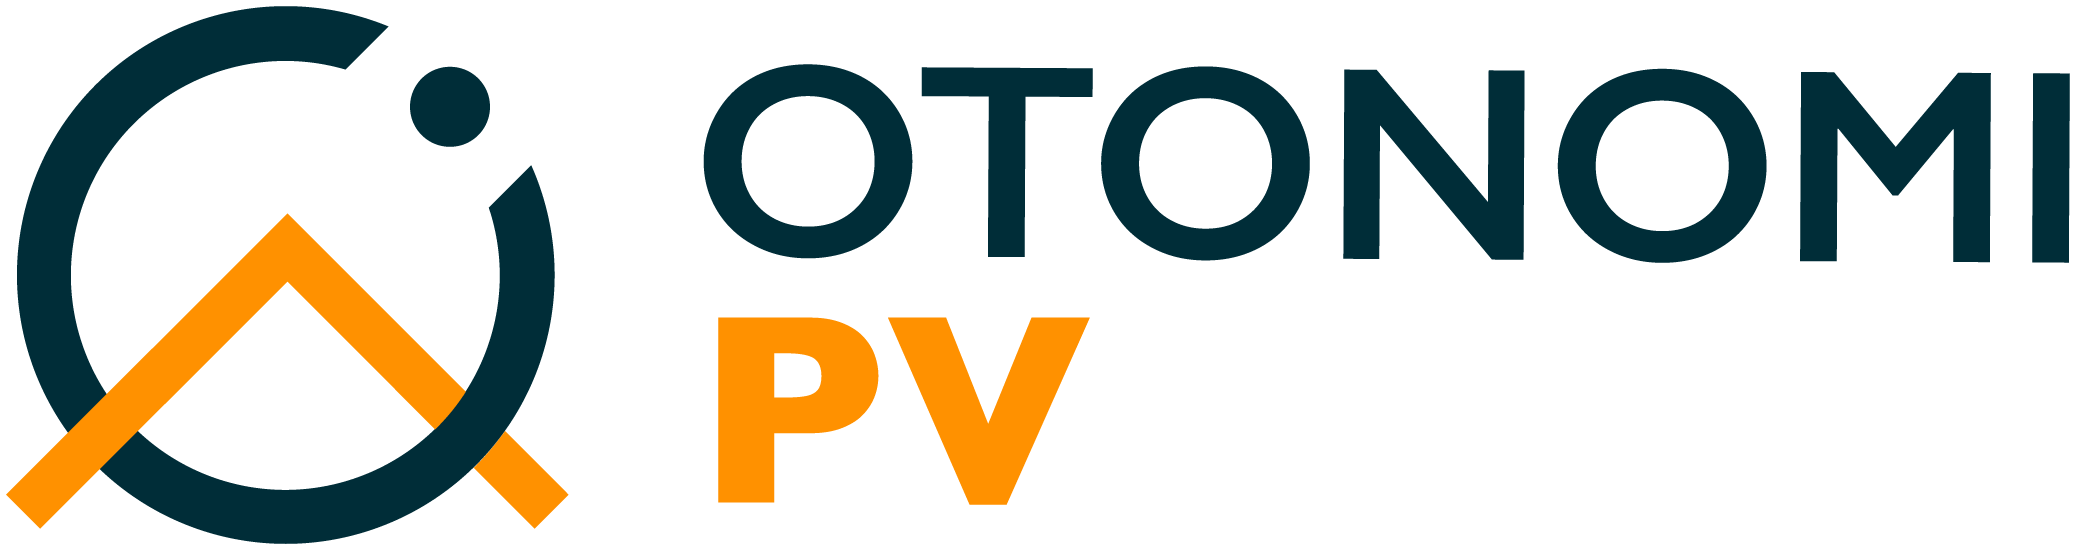 Logo Otonomi PV